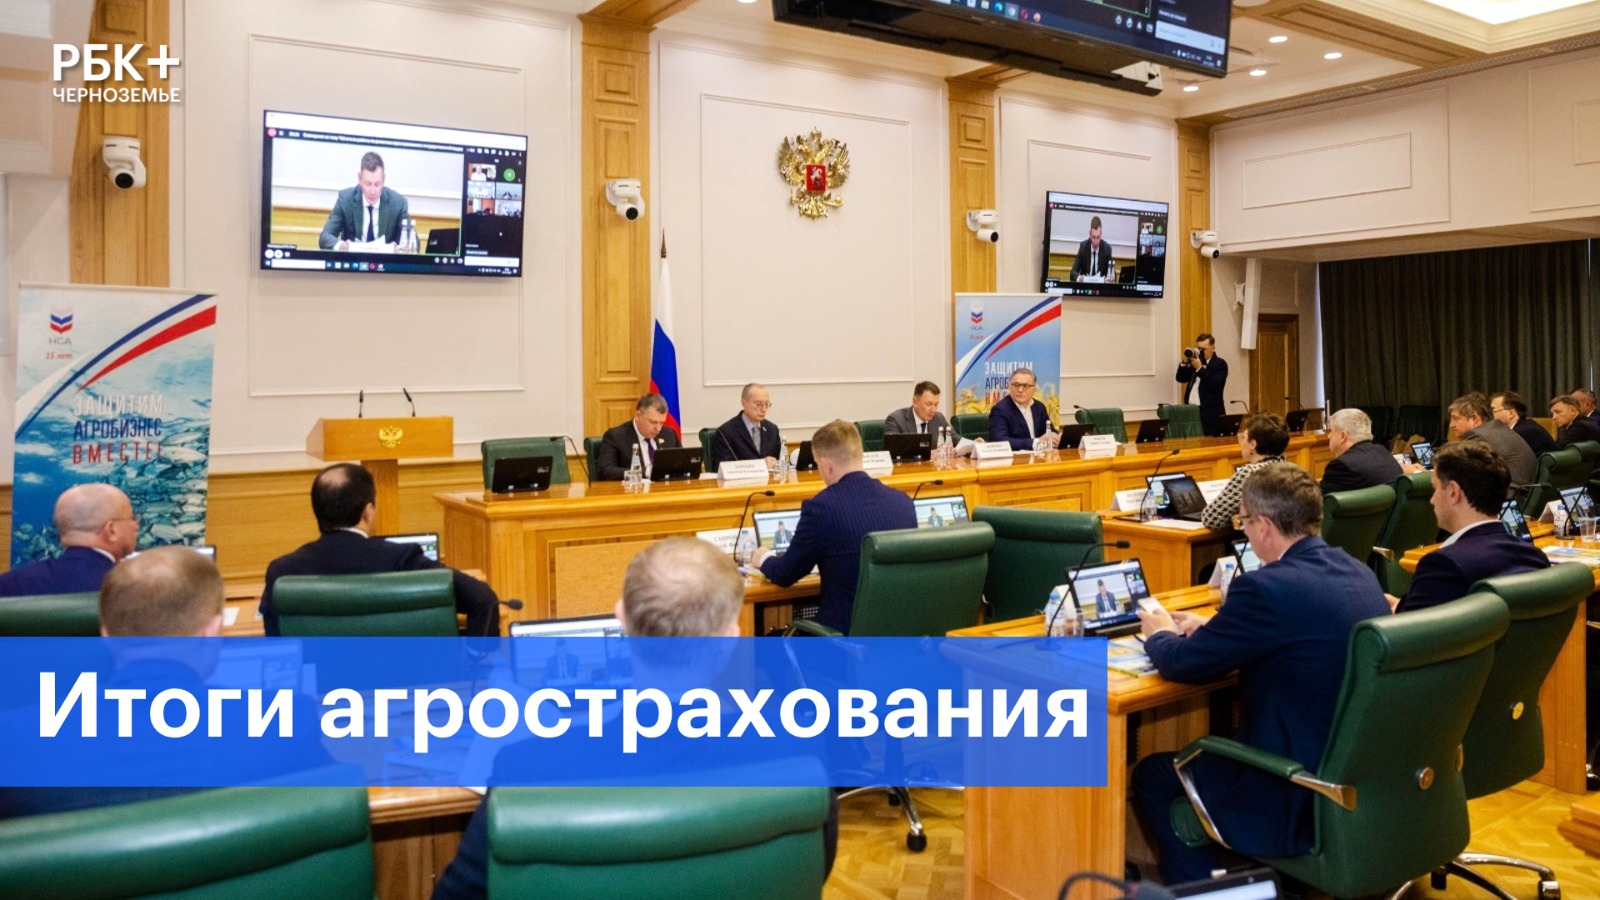 В аграрном комитете в Совете Федерации обсудили итоги агрострахования